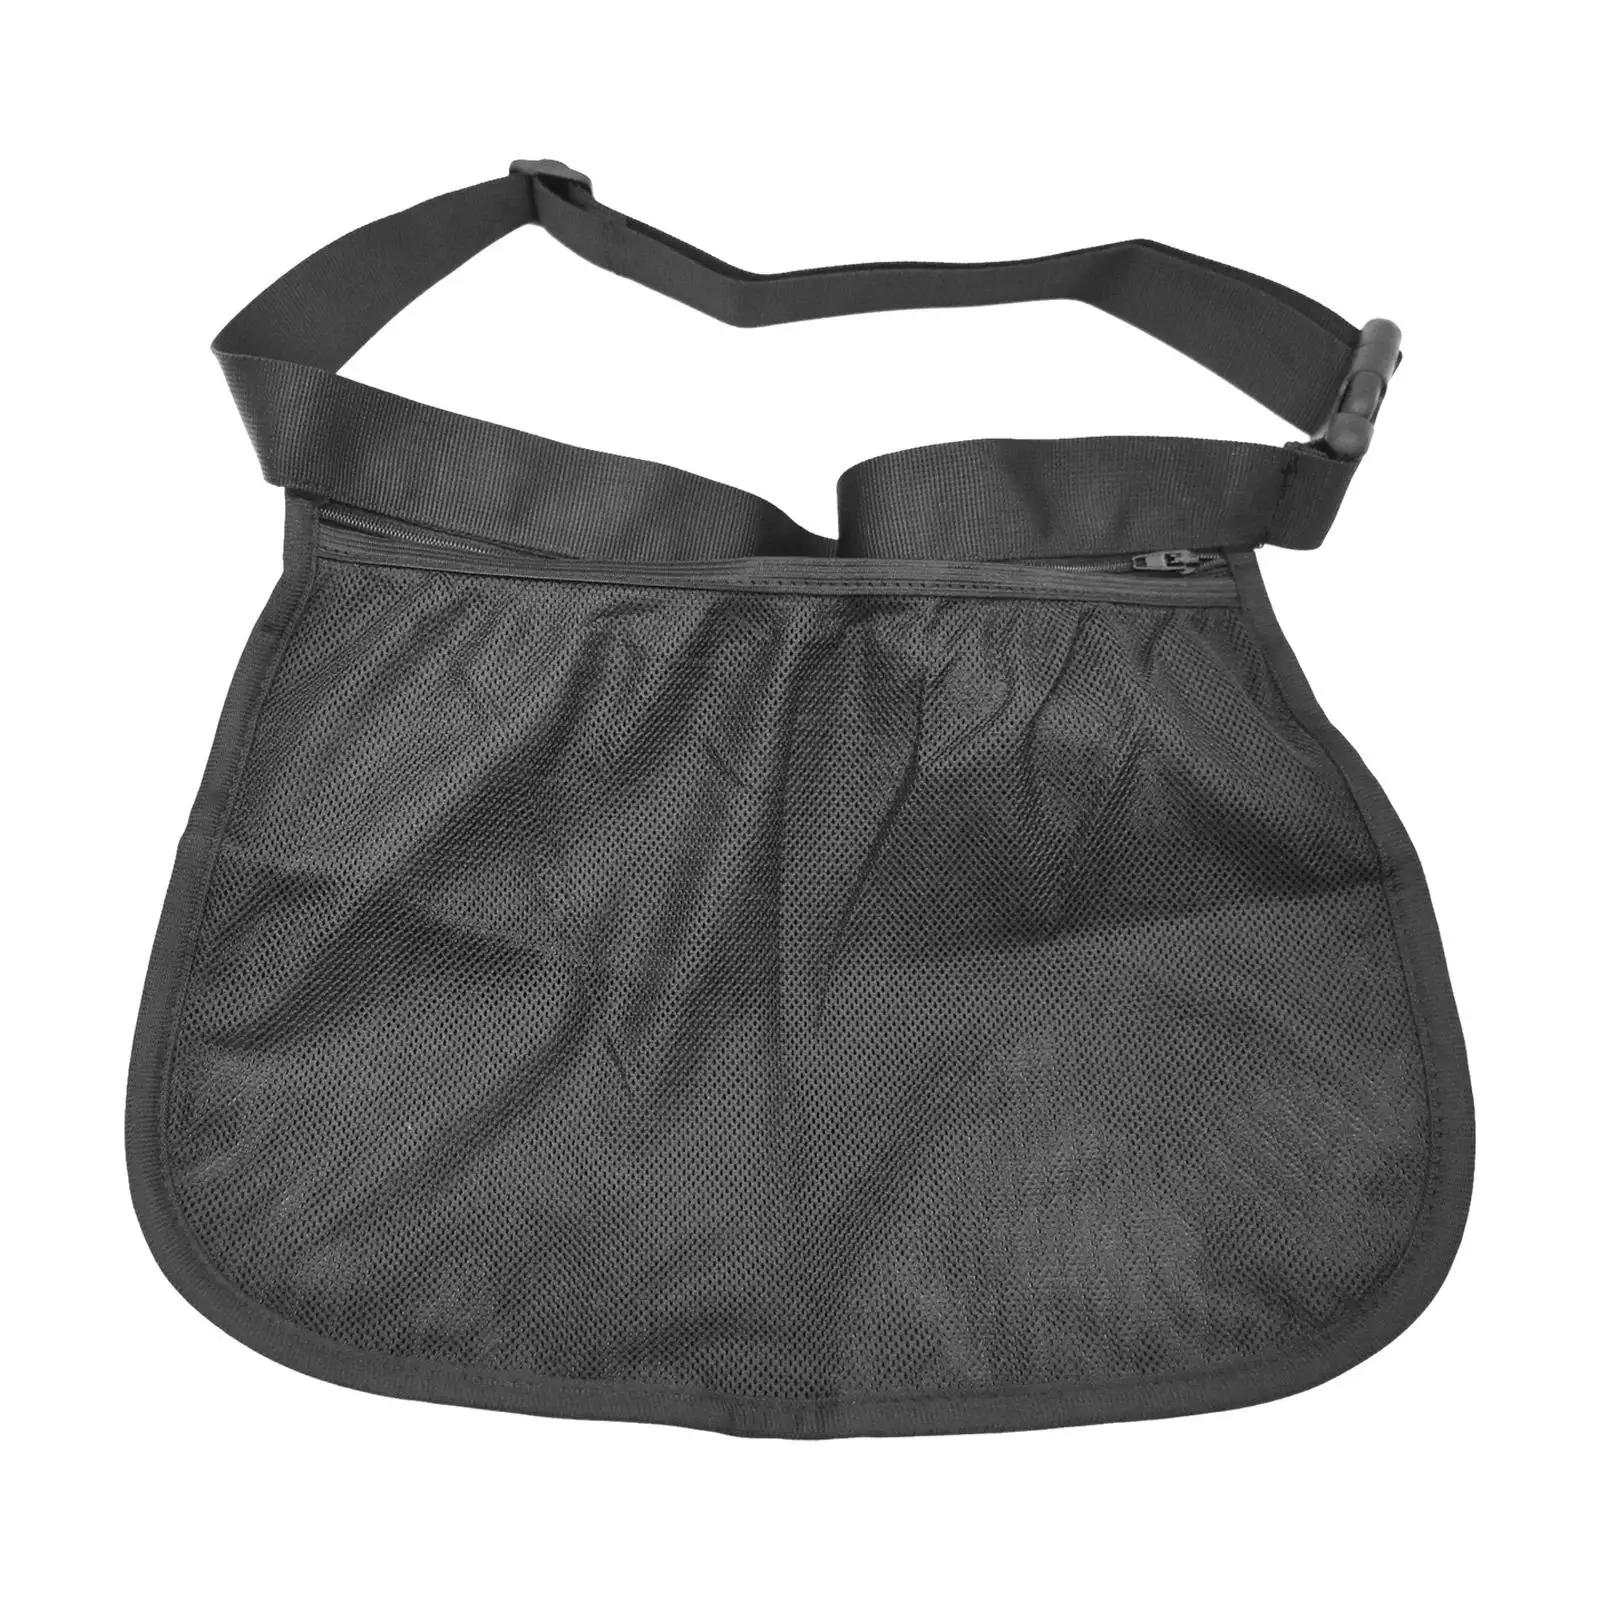 Black Tennis Ball Holder Waist Hip Bag Carrying Bag Holding 8 Tennis Balls Table Tennis Ball Holder Bag Tennis Ball Storage Bag